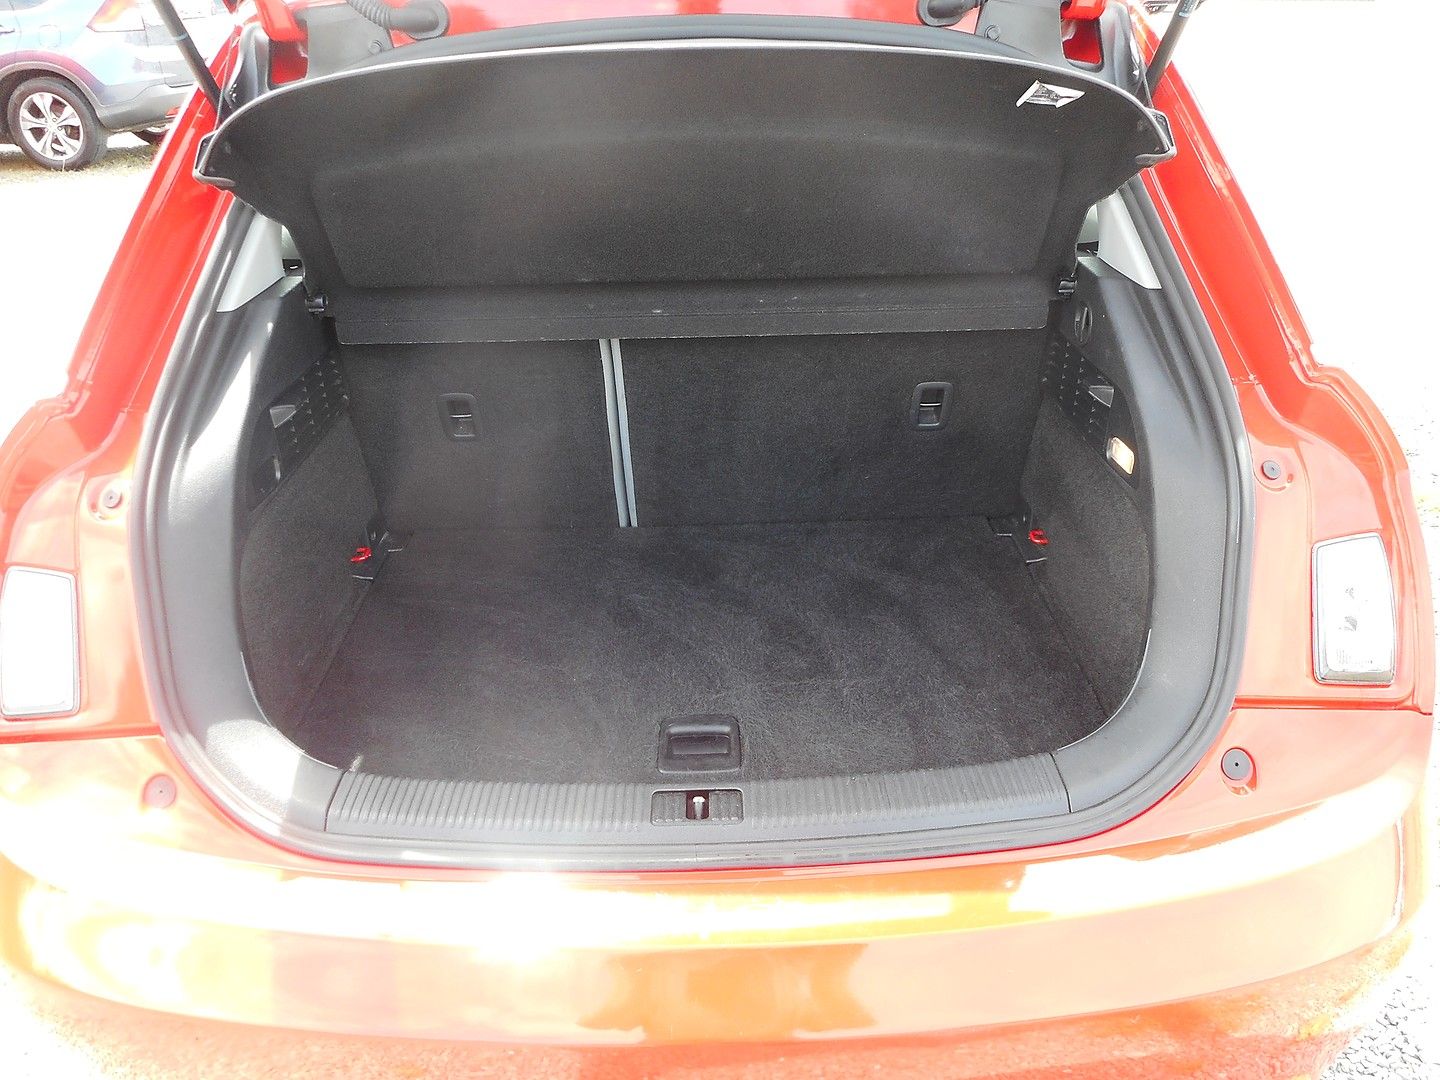 AUDI A1 1.6 TDI SE 105PS Sportback (2012) - Picture 7